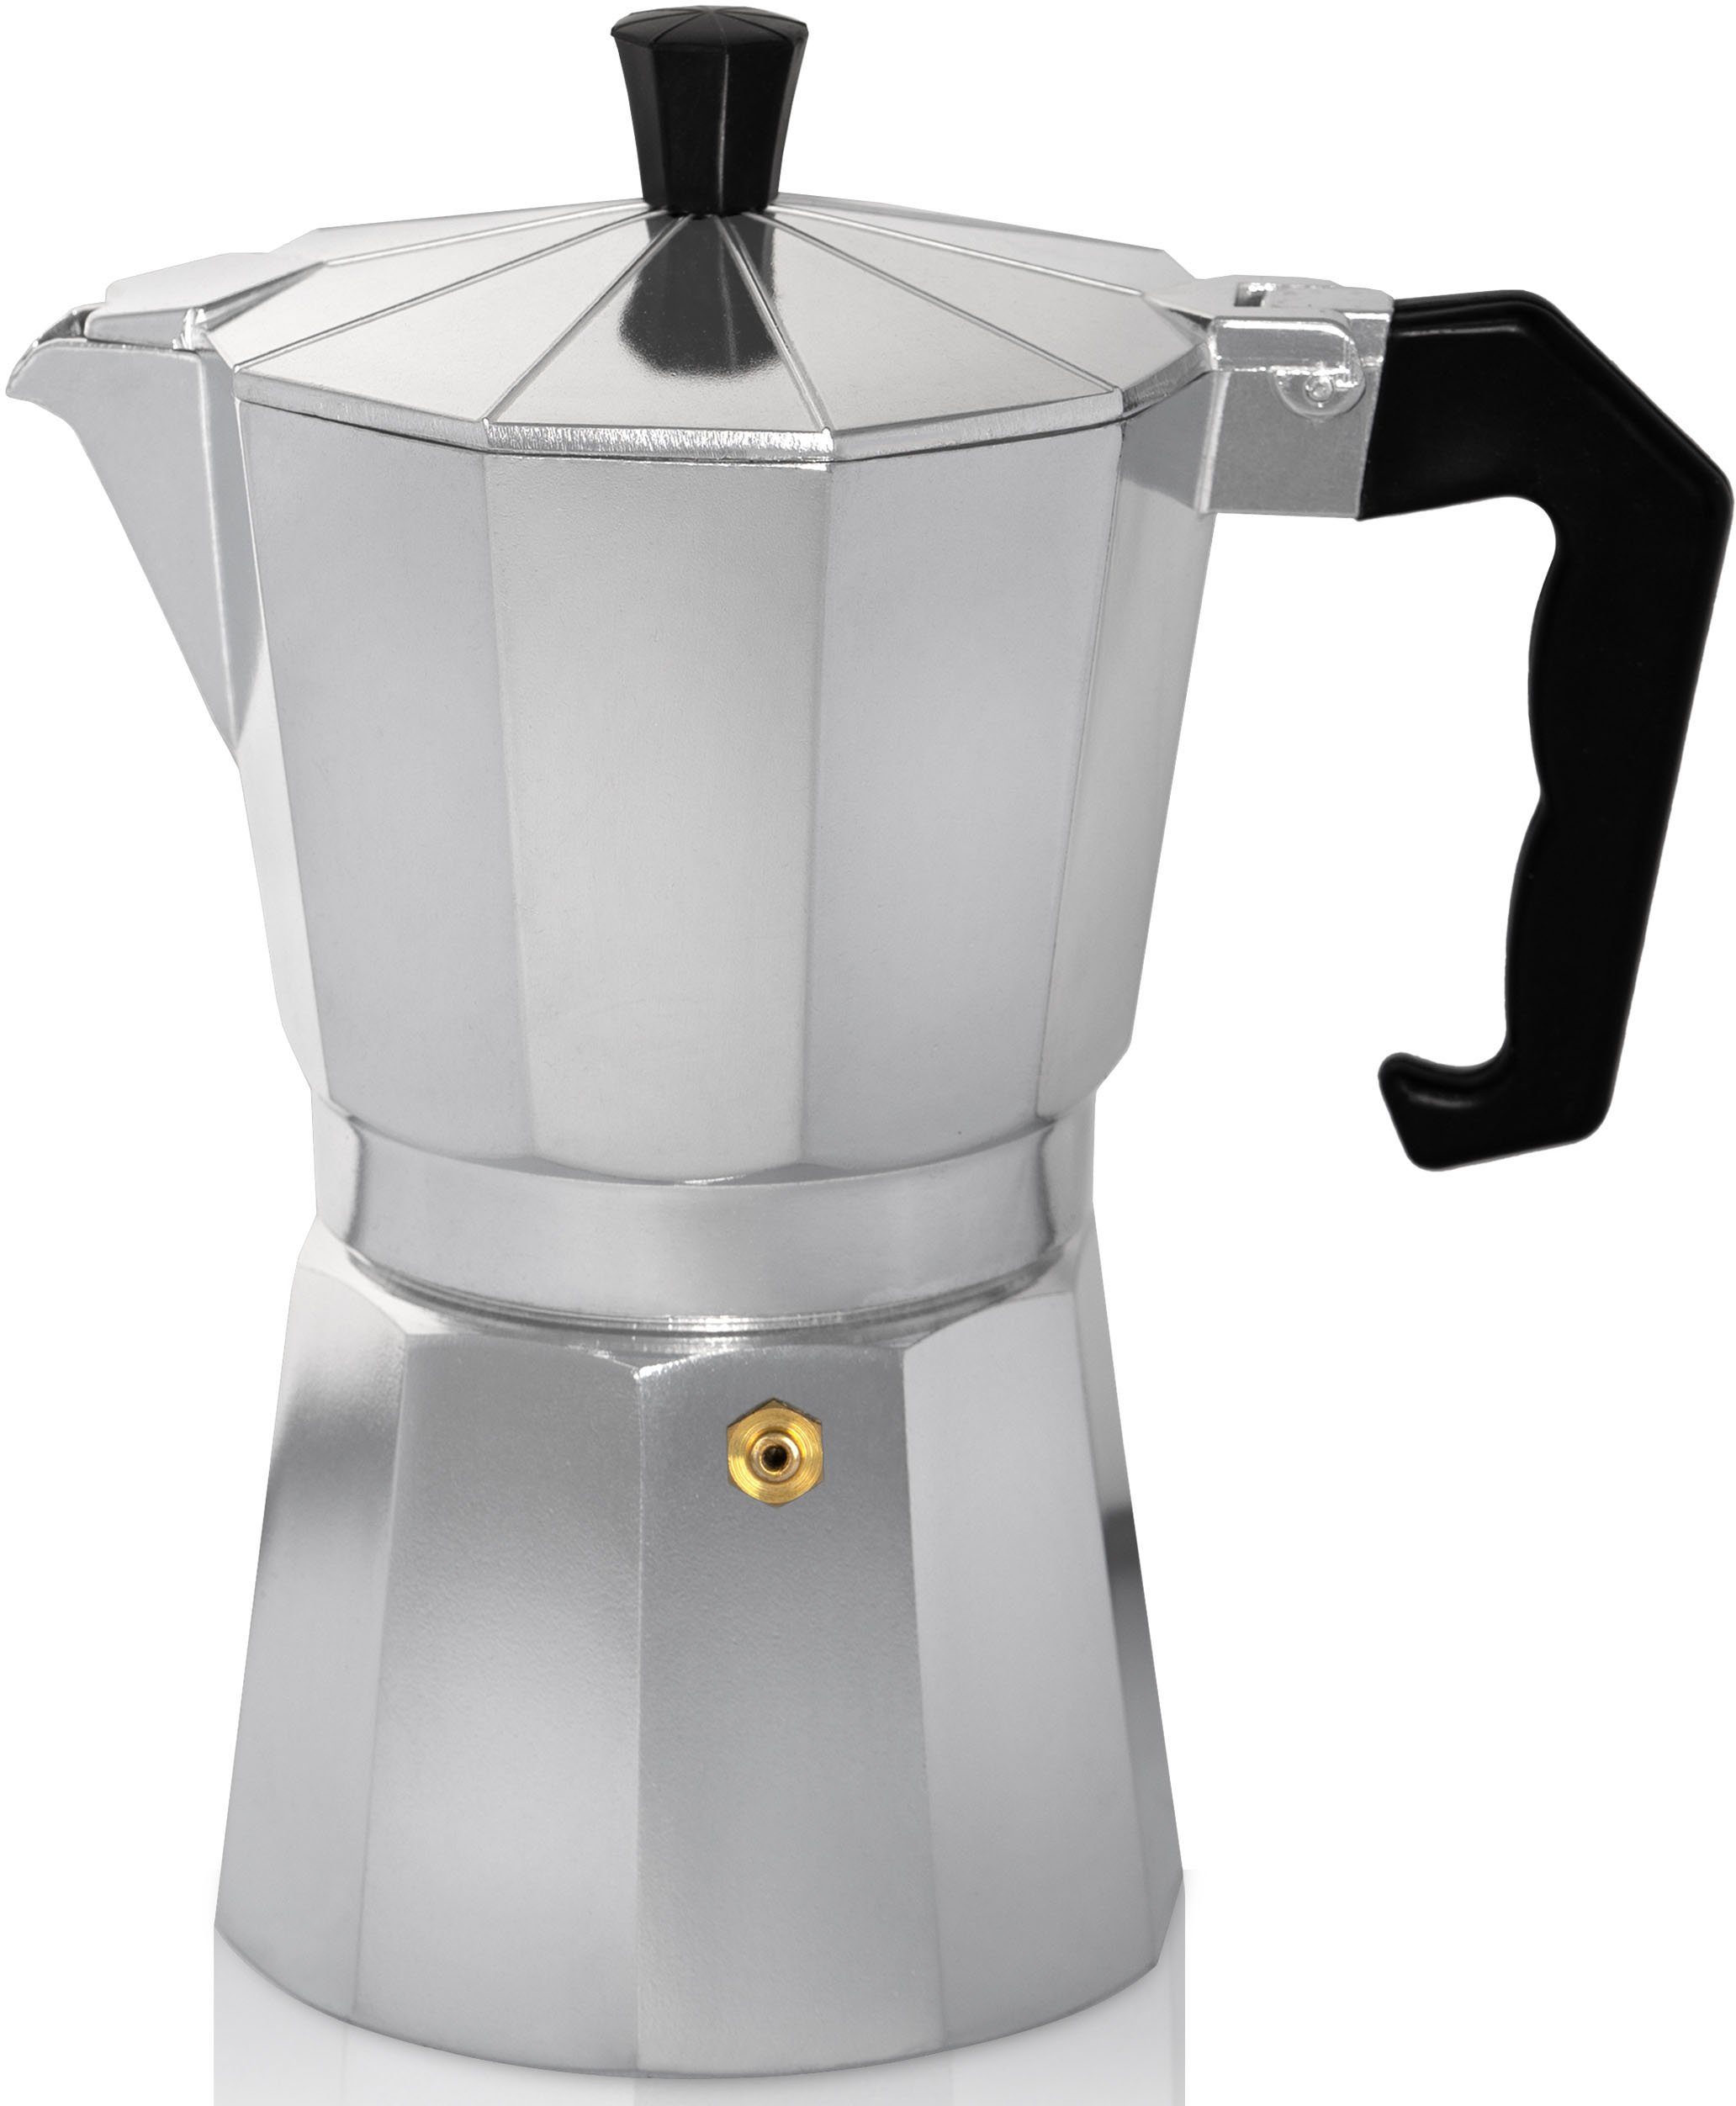 Krüger Espressokocher Italiano, 0,45l Kaffeekanne, traditionell italienisch, aus Aluminium, mit Silikon-Dichtungsring